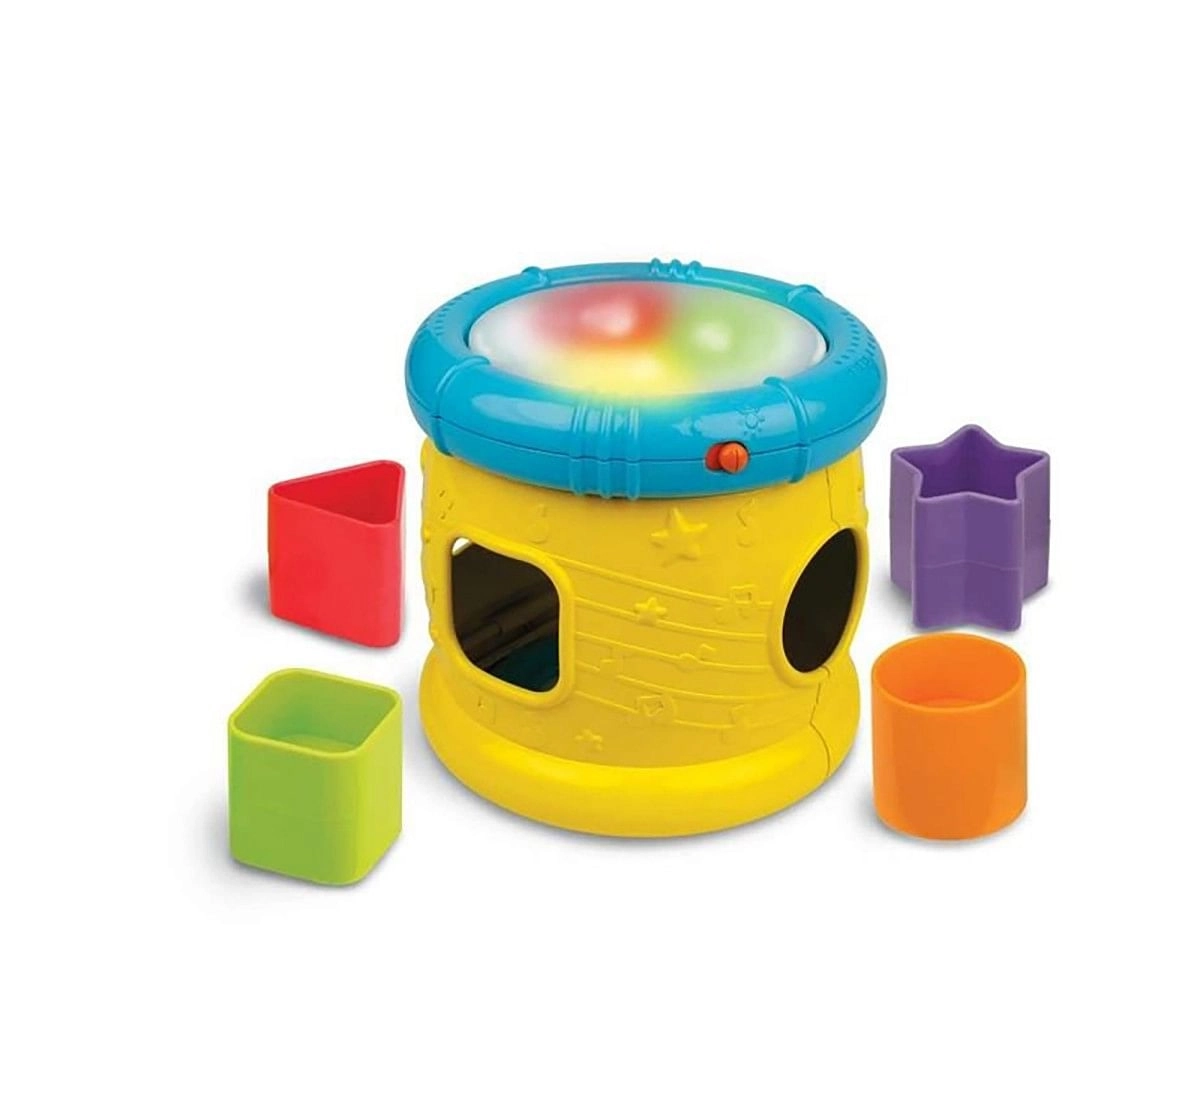 Winfun Sort'N Fun Musical Drum   Musical Toys for Kids age 12M+ 